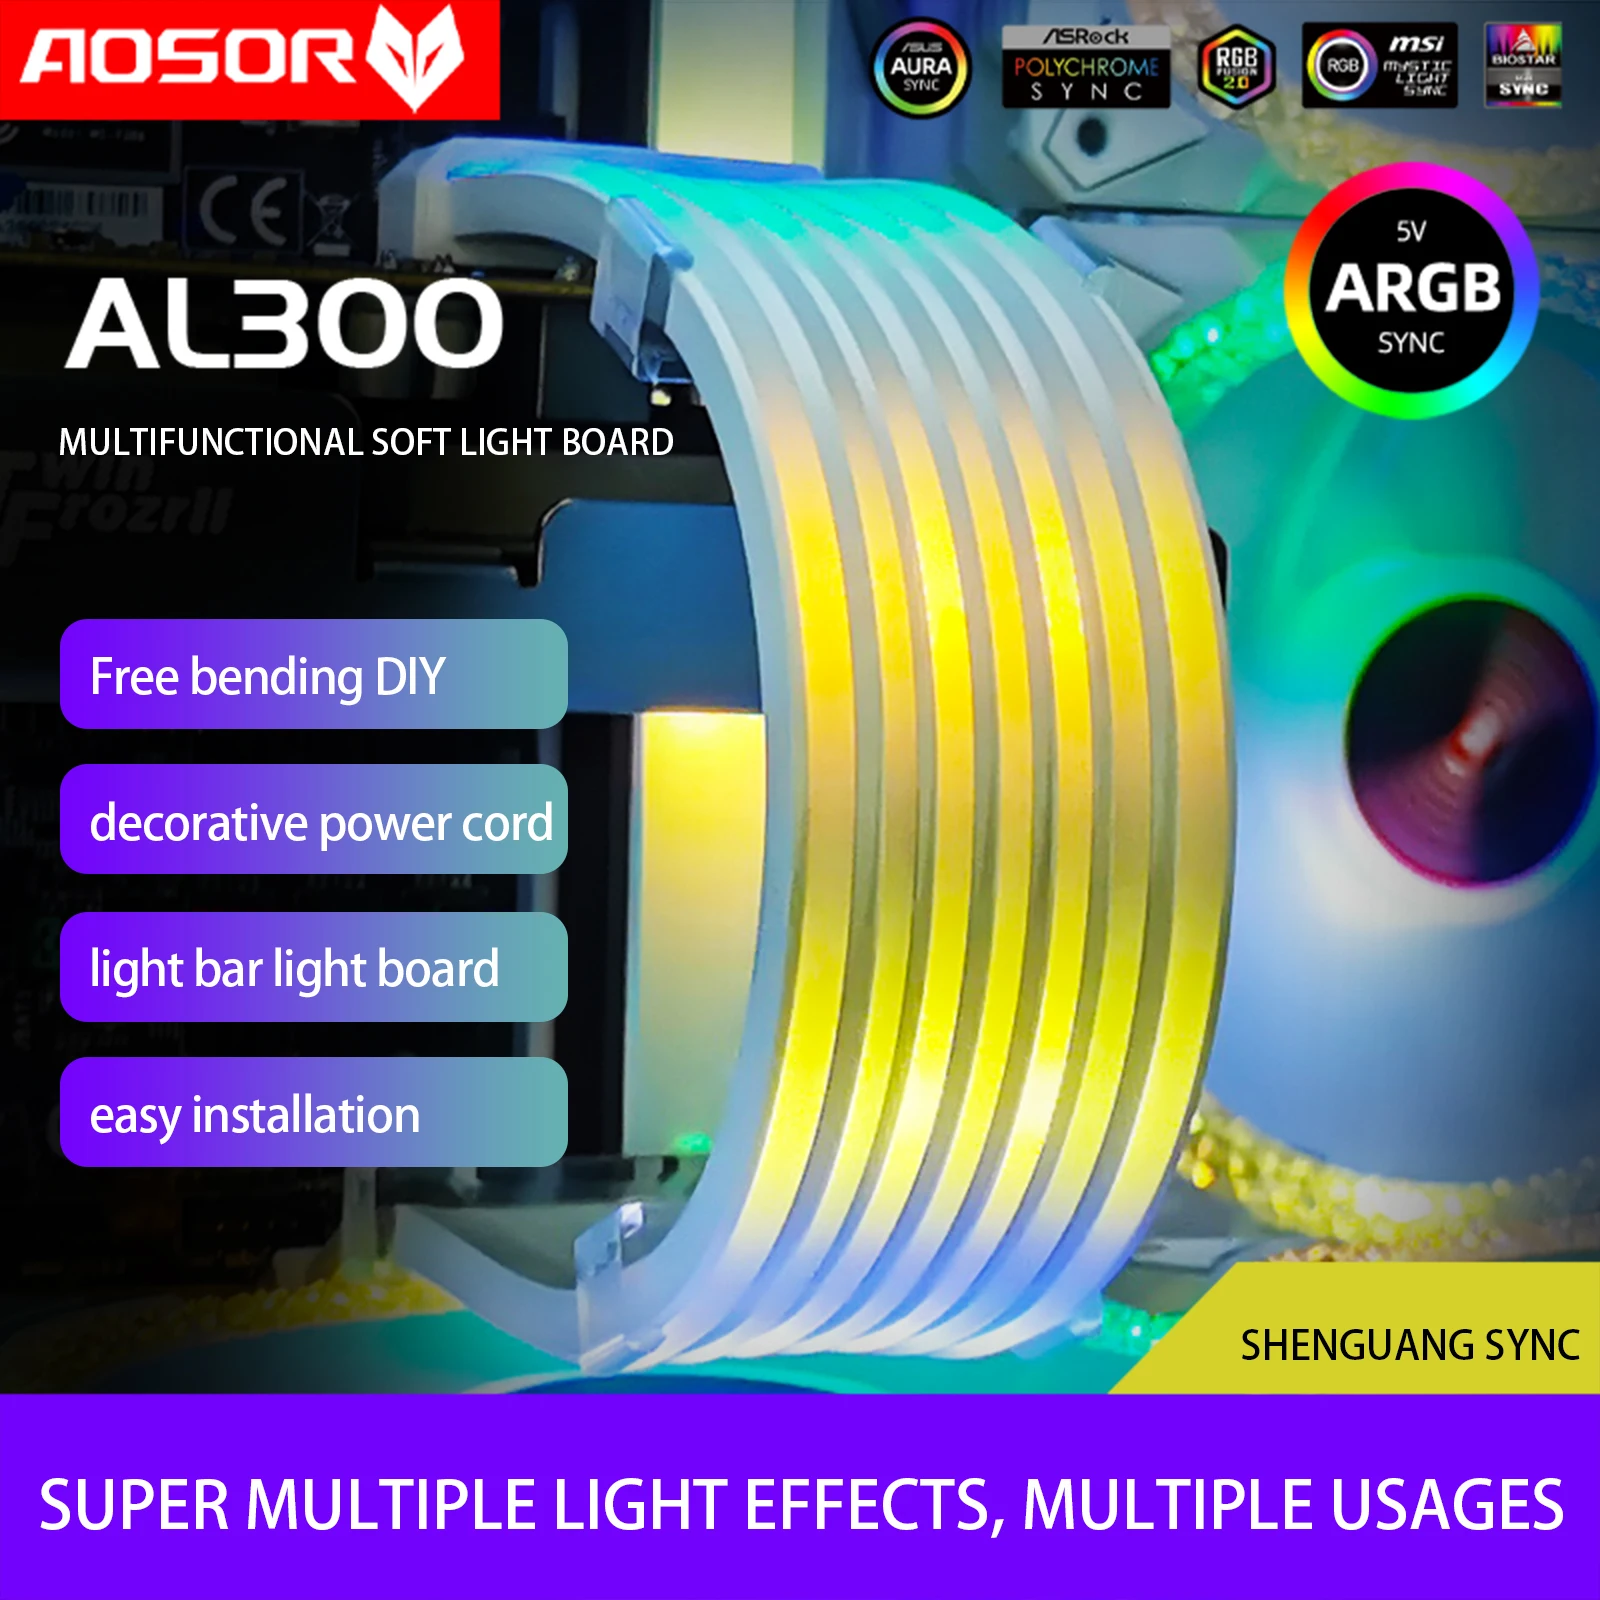 

COOLMOON AOSOR Lamp Tape PC Backlight Flexible Mounting Light 5V ARGB Aura Sync Flexible LED Light Bendable for 8P Graphics Card